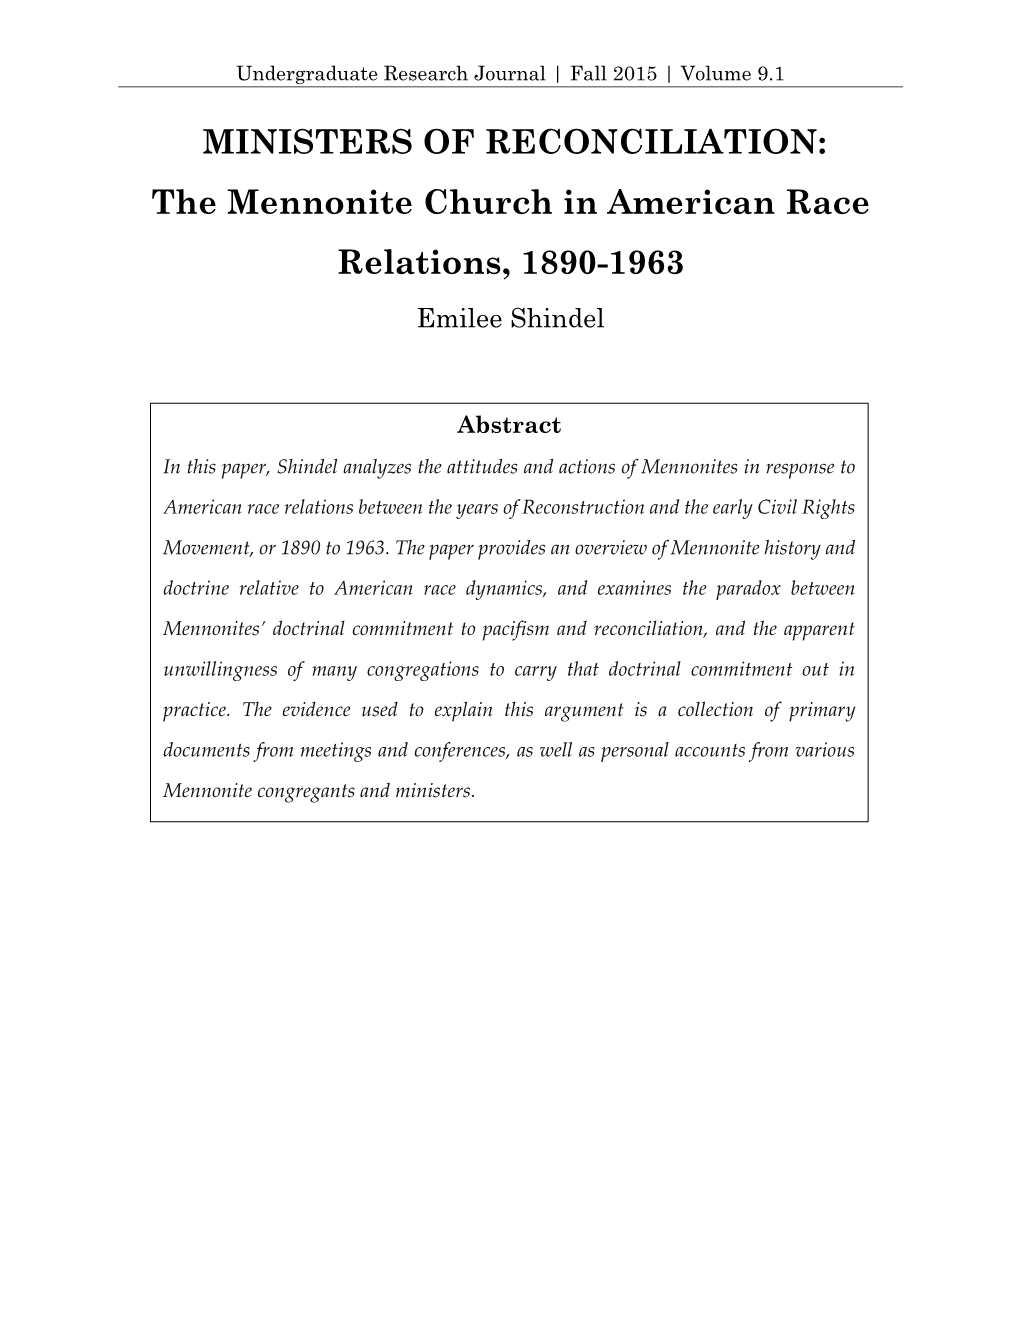 The Mennonite Church in American Race Relations, 1890-1963 Emilee Shindel